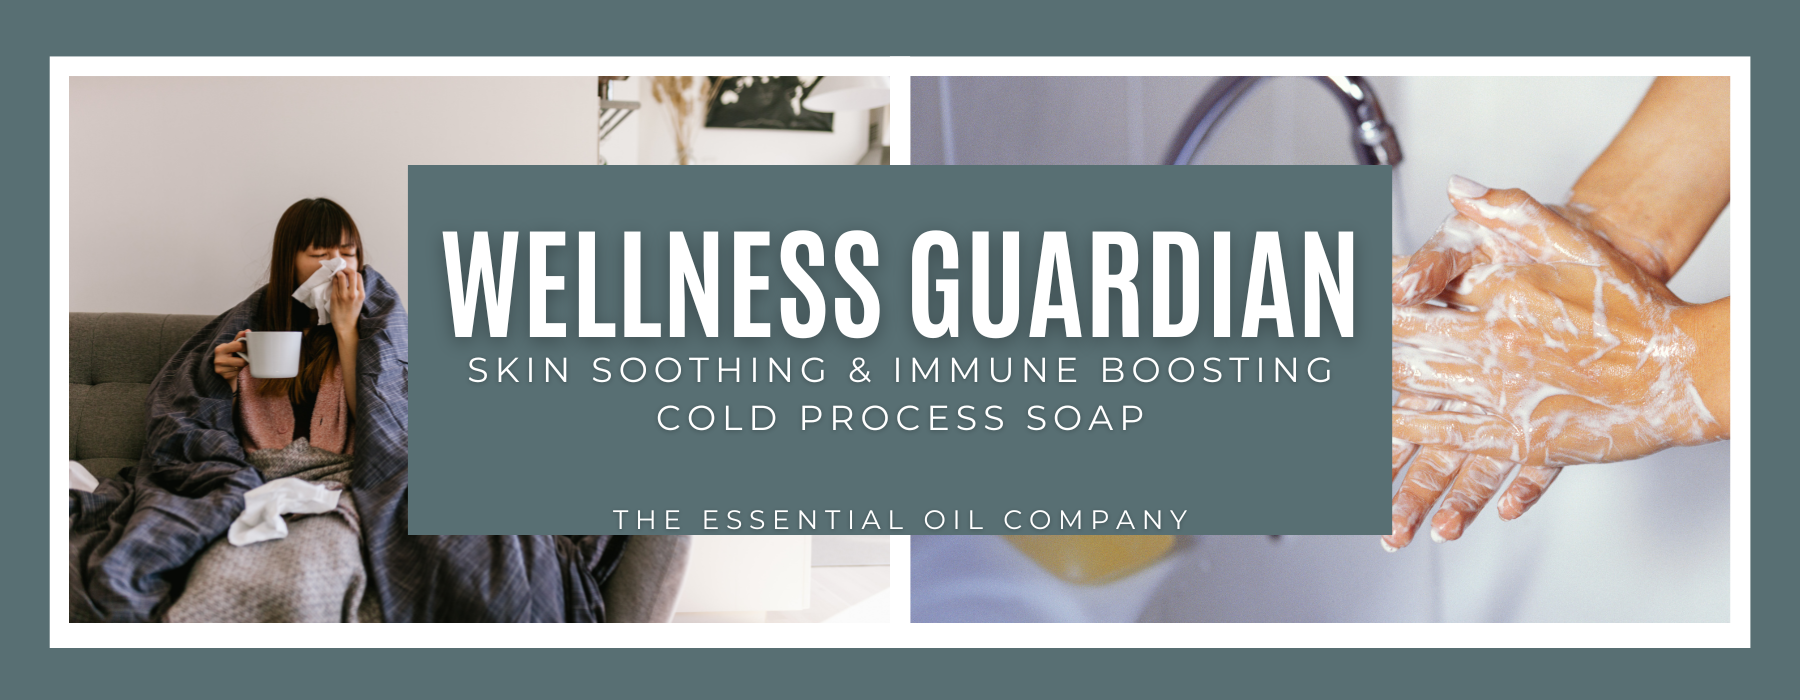 Wellness Guardian Skin Soothing & Immune Boosting Soap